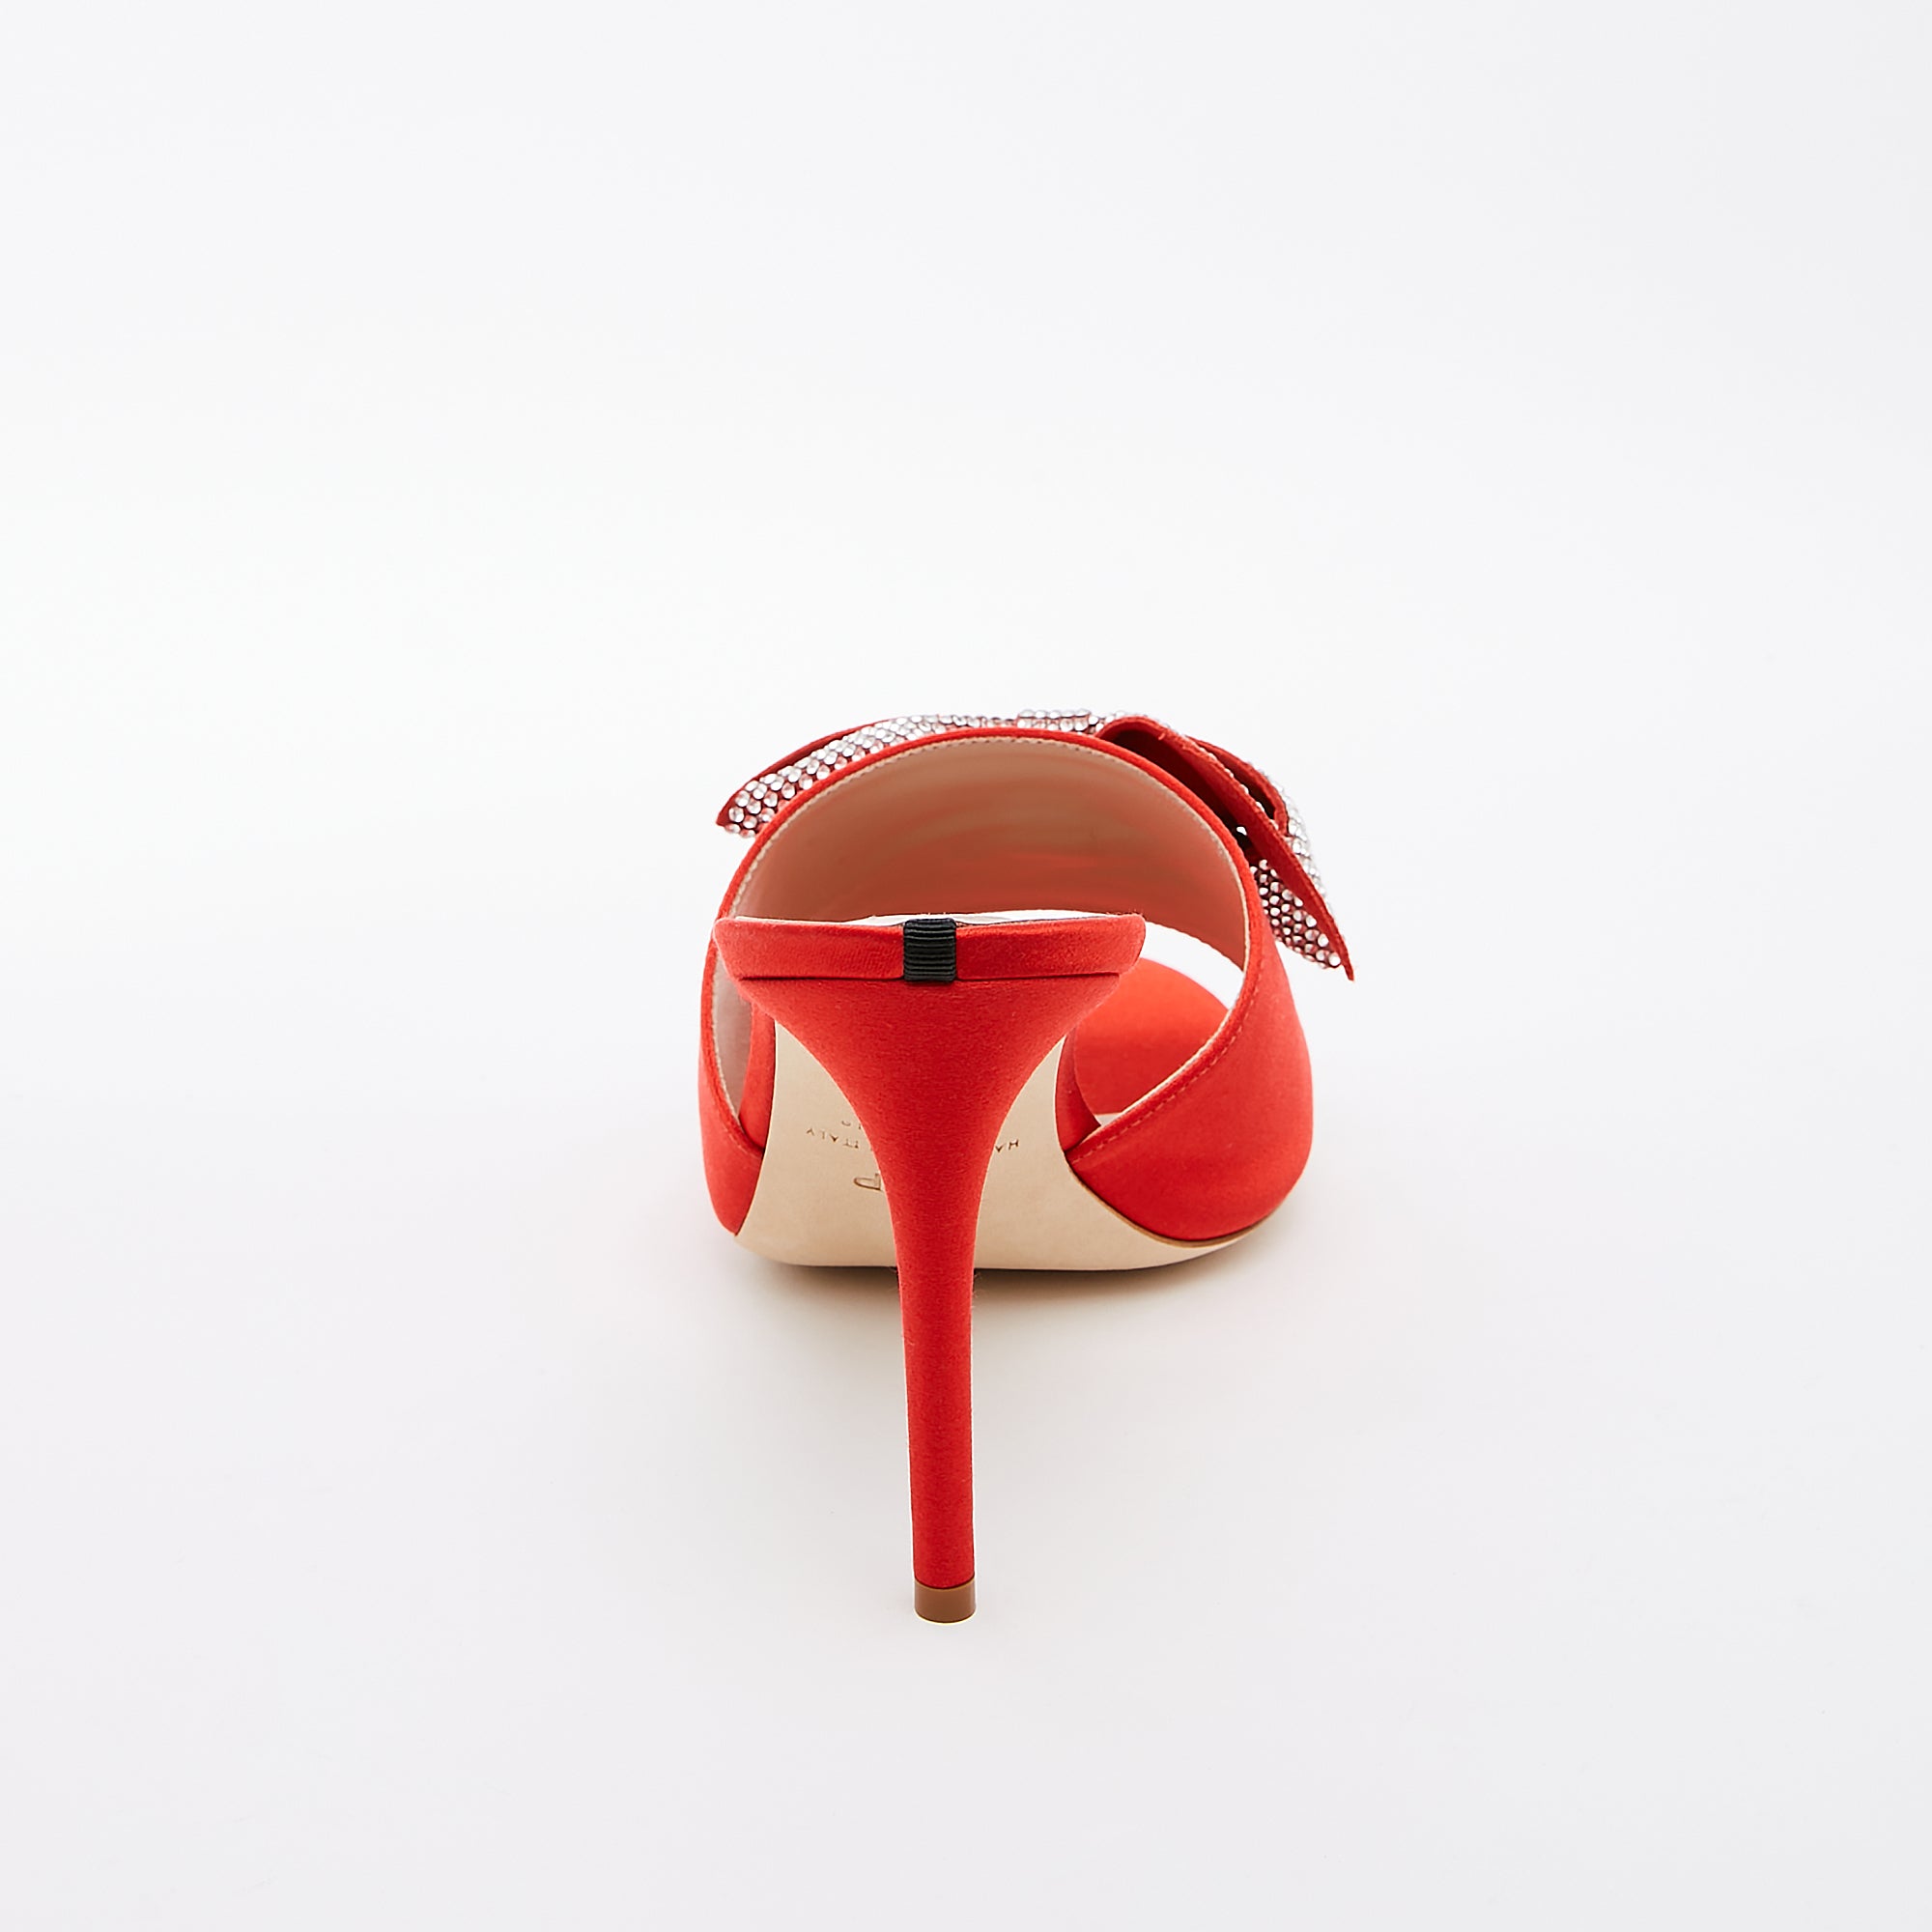 SJP by Sarah Jessica Parker Amna 90mm Red Satin Sandals